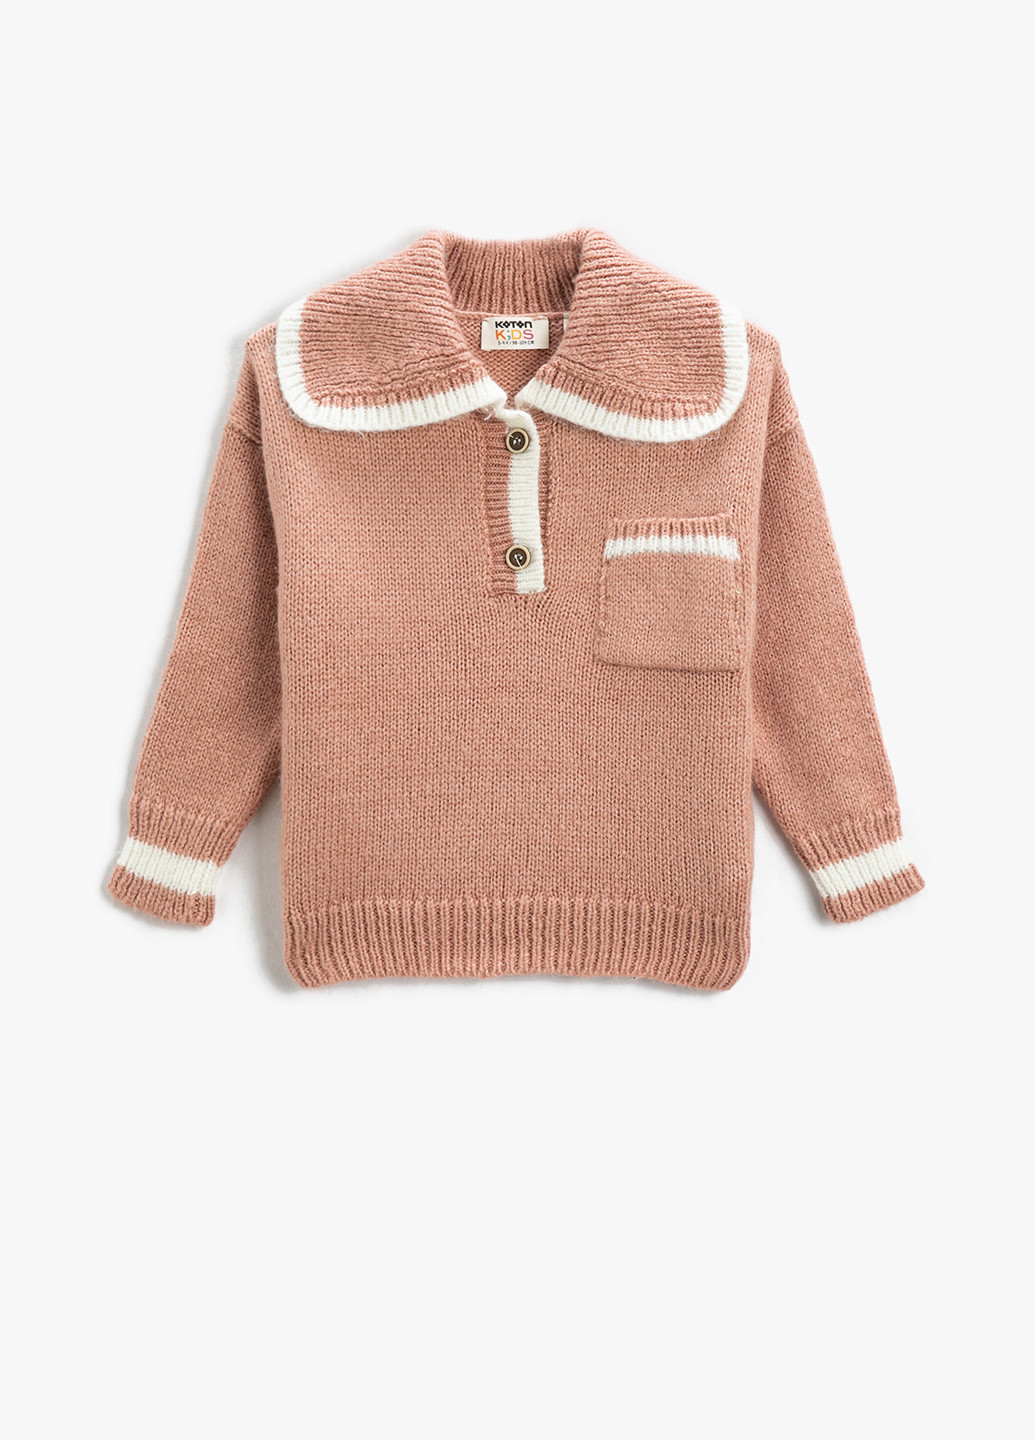 Персиковый зимний свитер джемпер KOTON